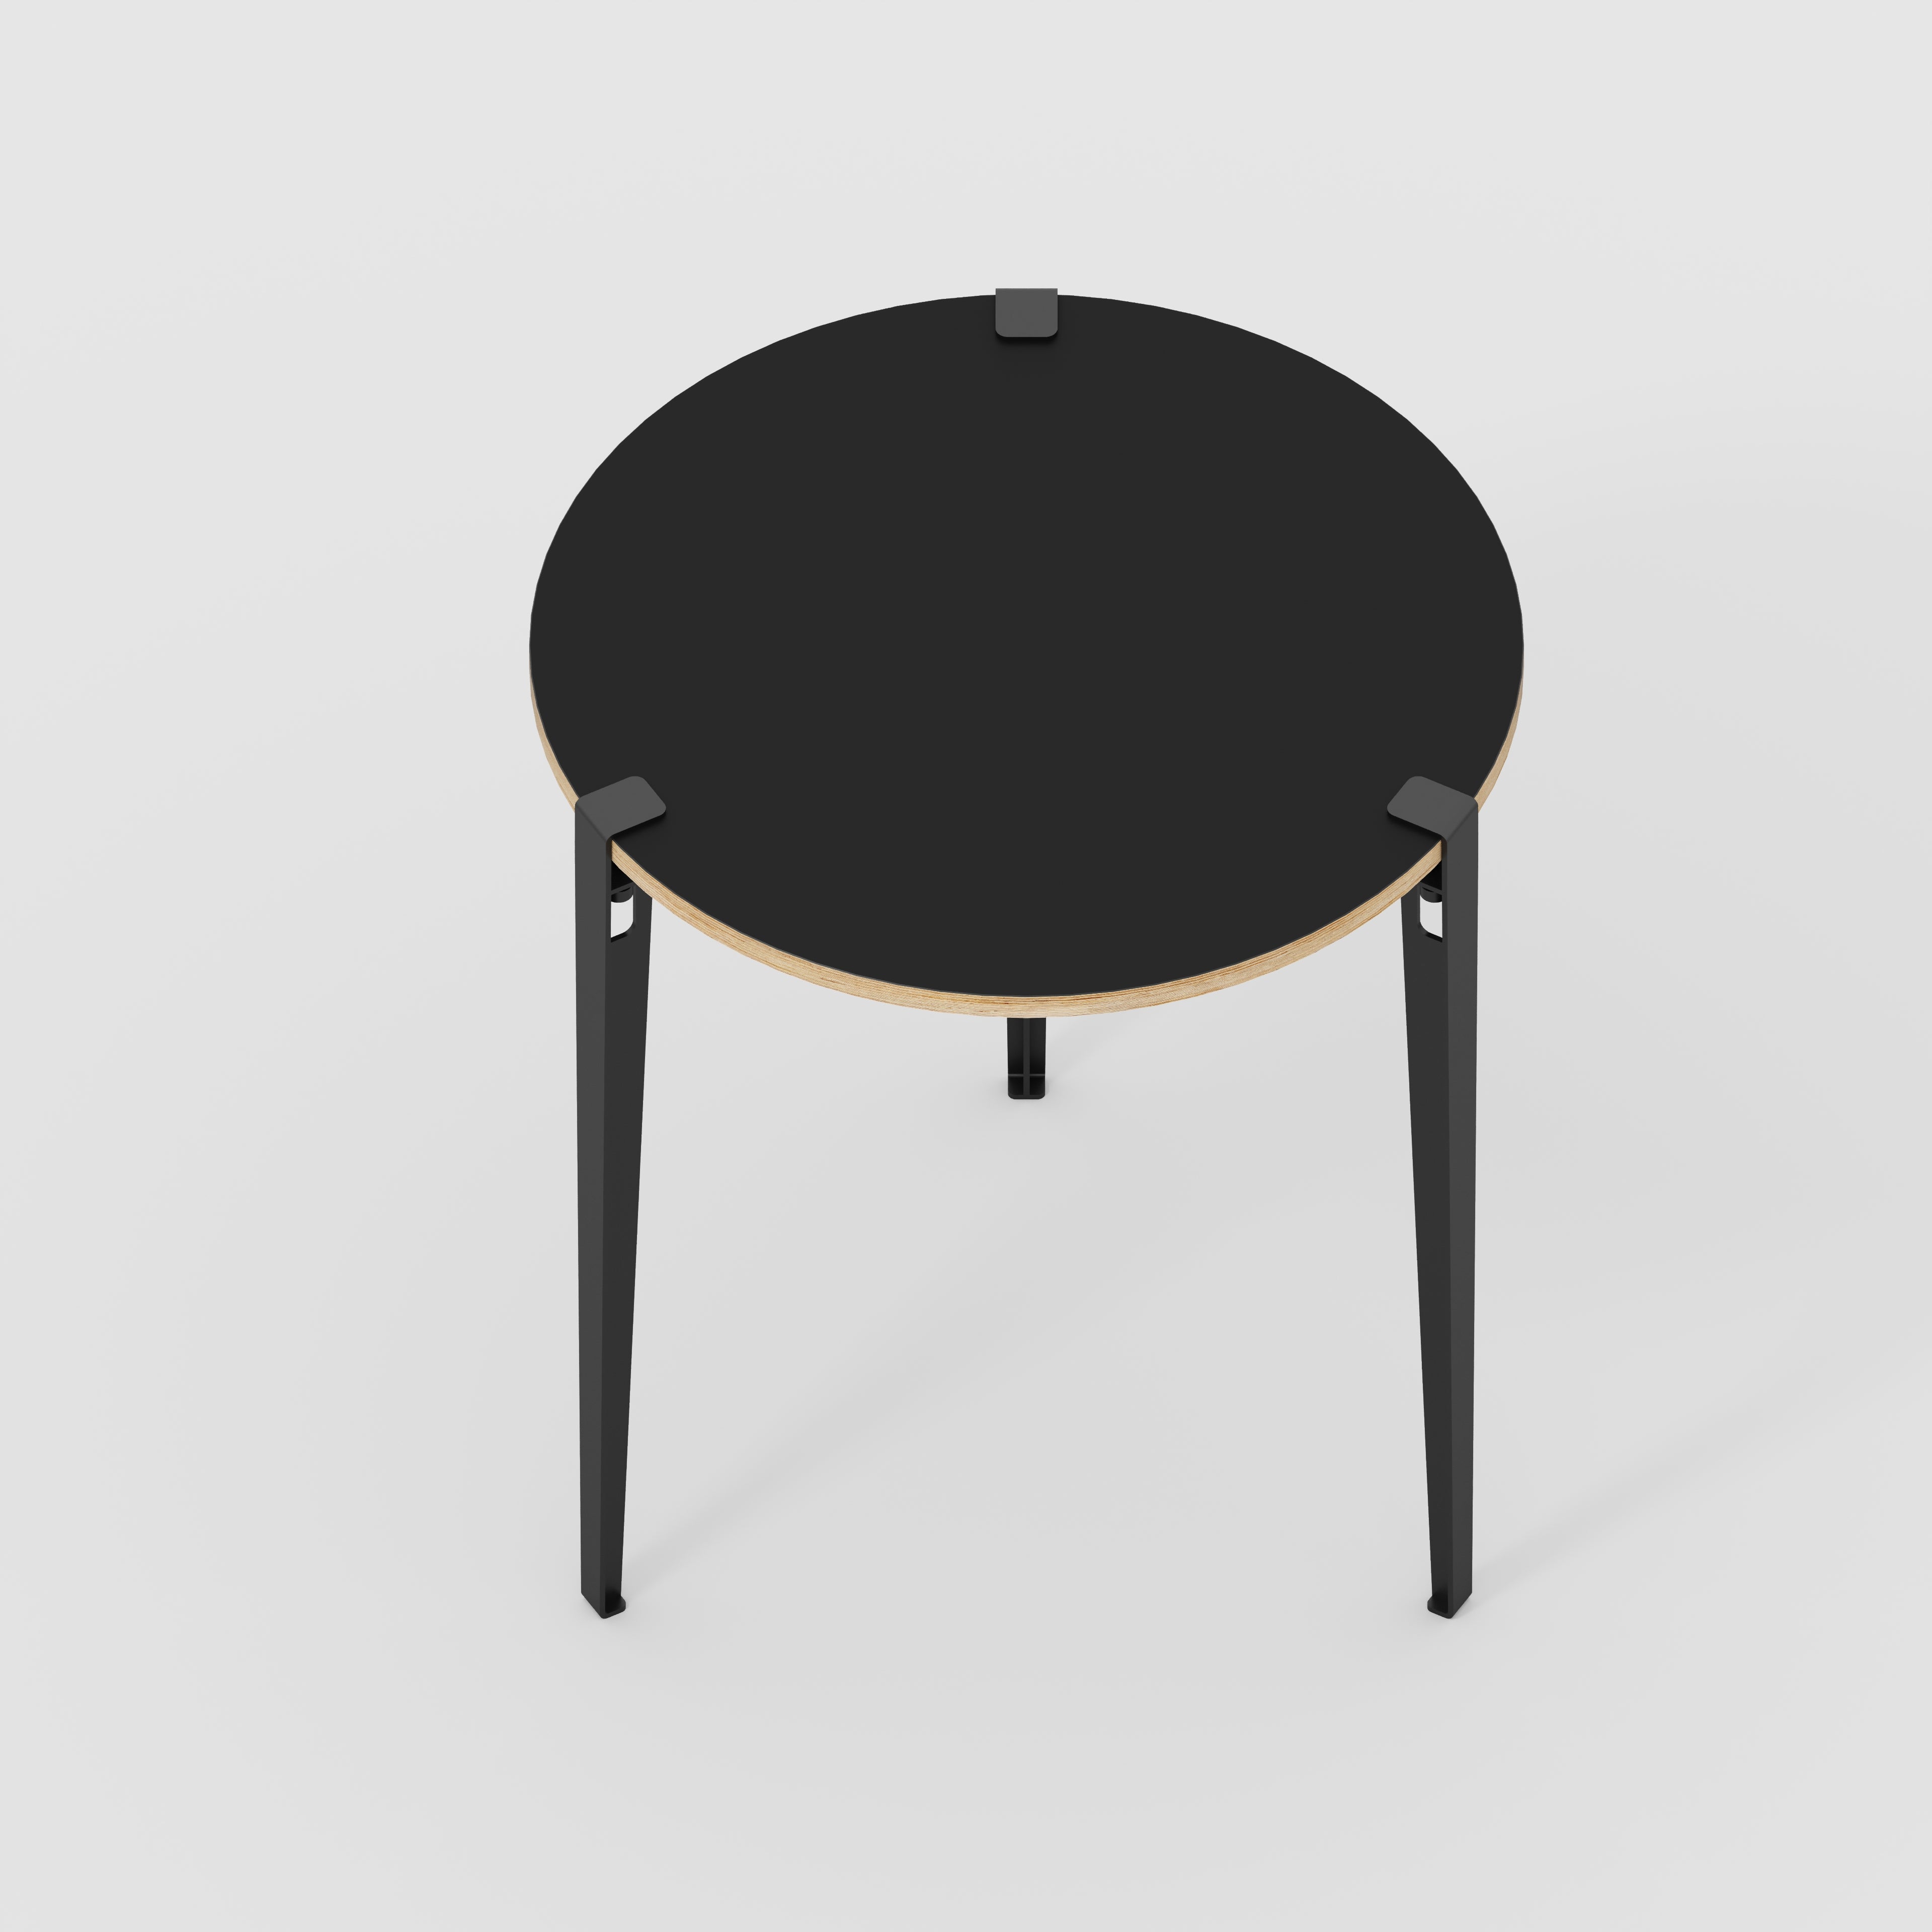 Round Table with Black Tiptoe Legs - Formica Diamond Black - 800(dia) x 900(h)